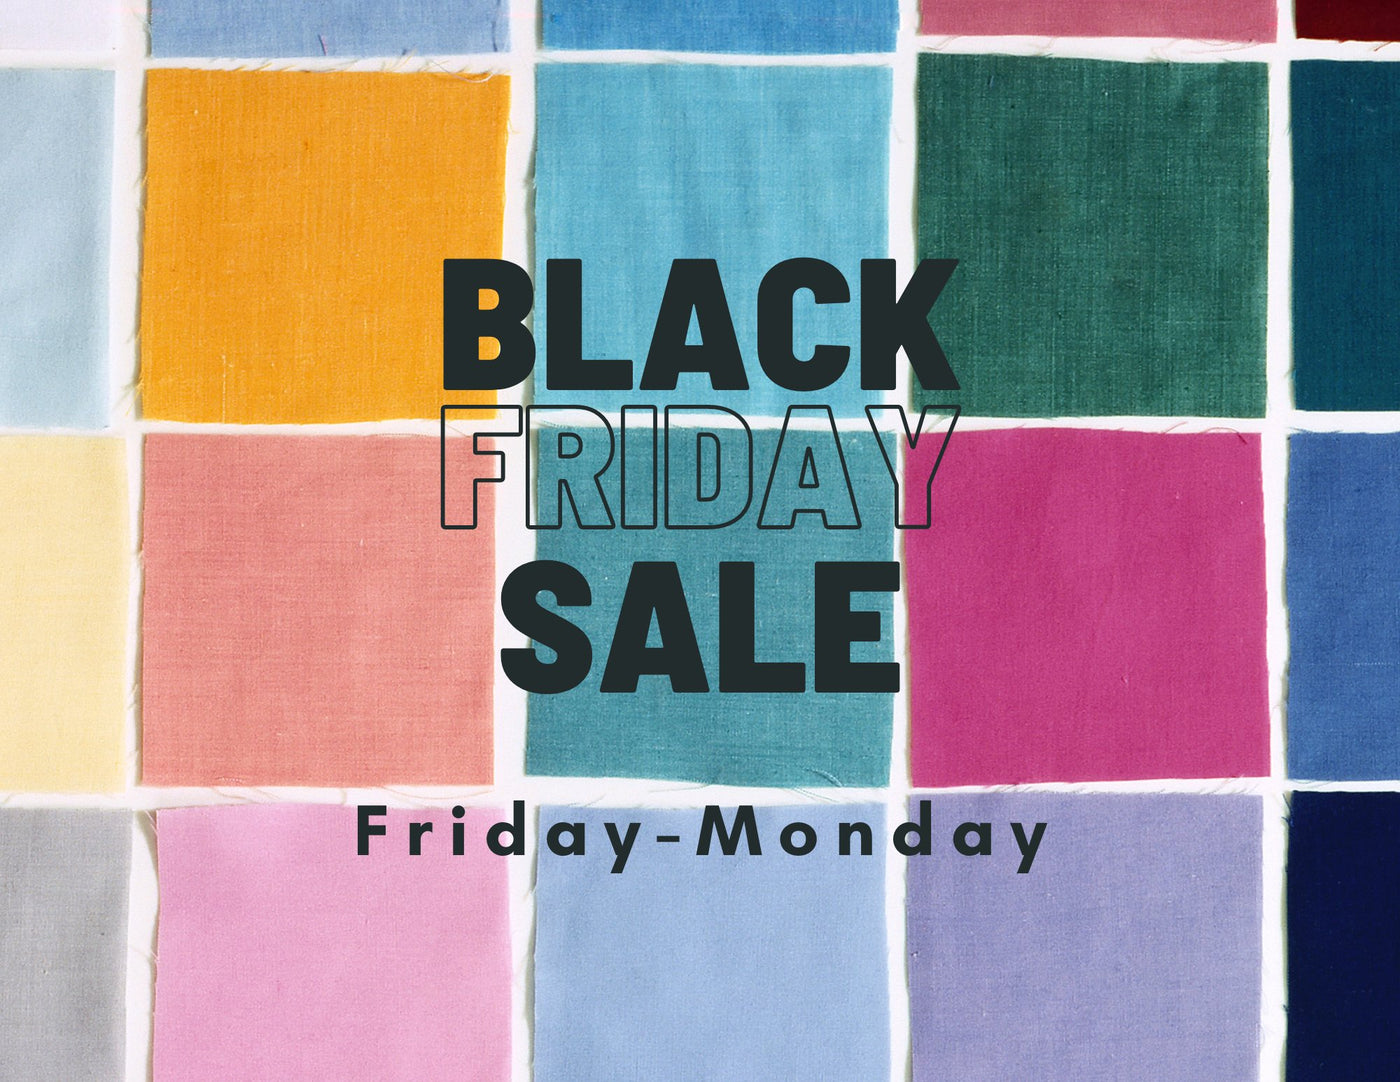 Black Friday Sale! Friday-Monday